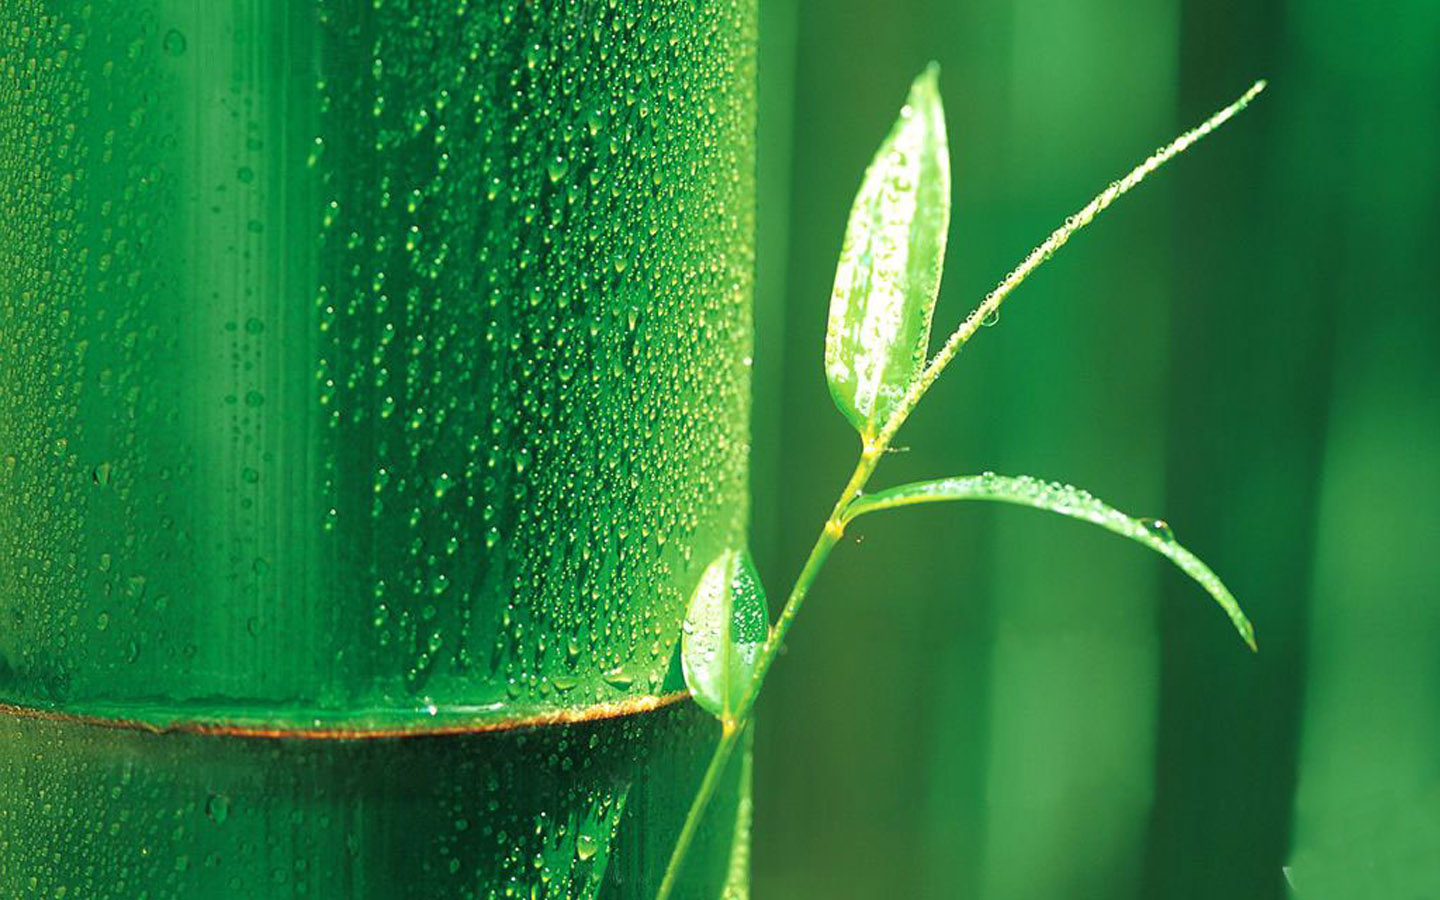 【1440x900】绿色竹子桌面背景图片 - 彼岸手机壁纸